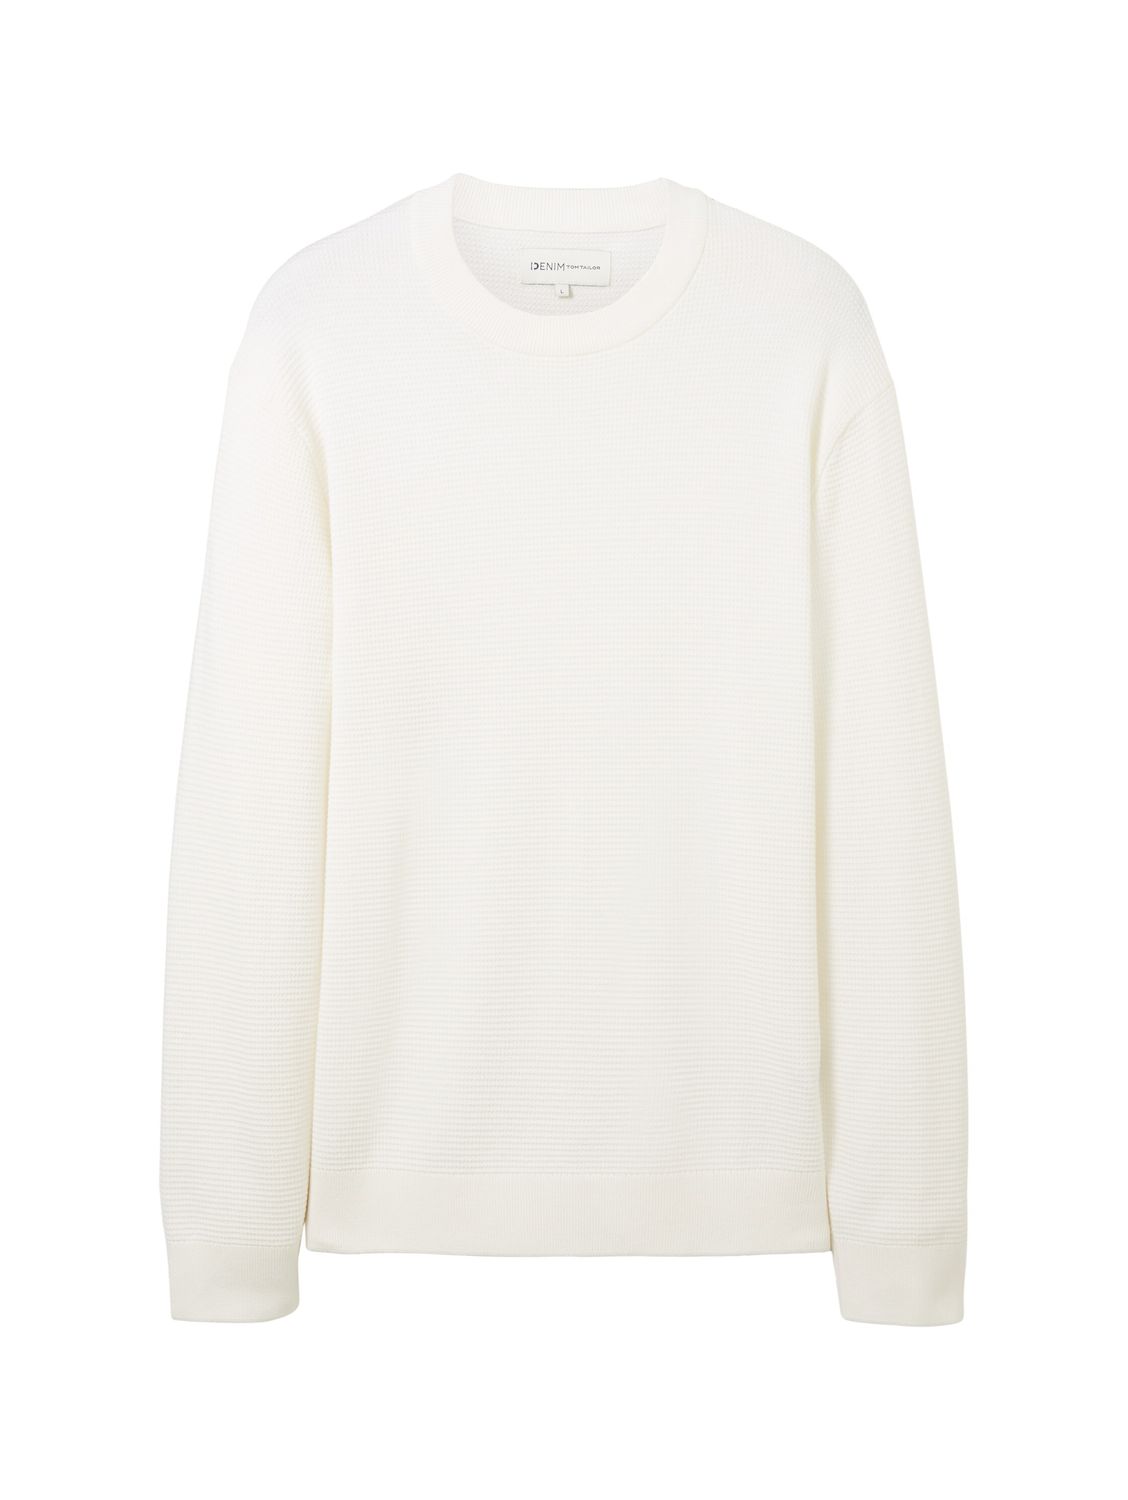 Пуловер TOM TAILOR Denim STRUCTURED BASIC, белый пуловер tom tailor denim basic серый